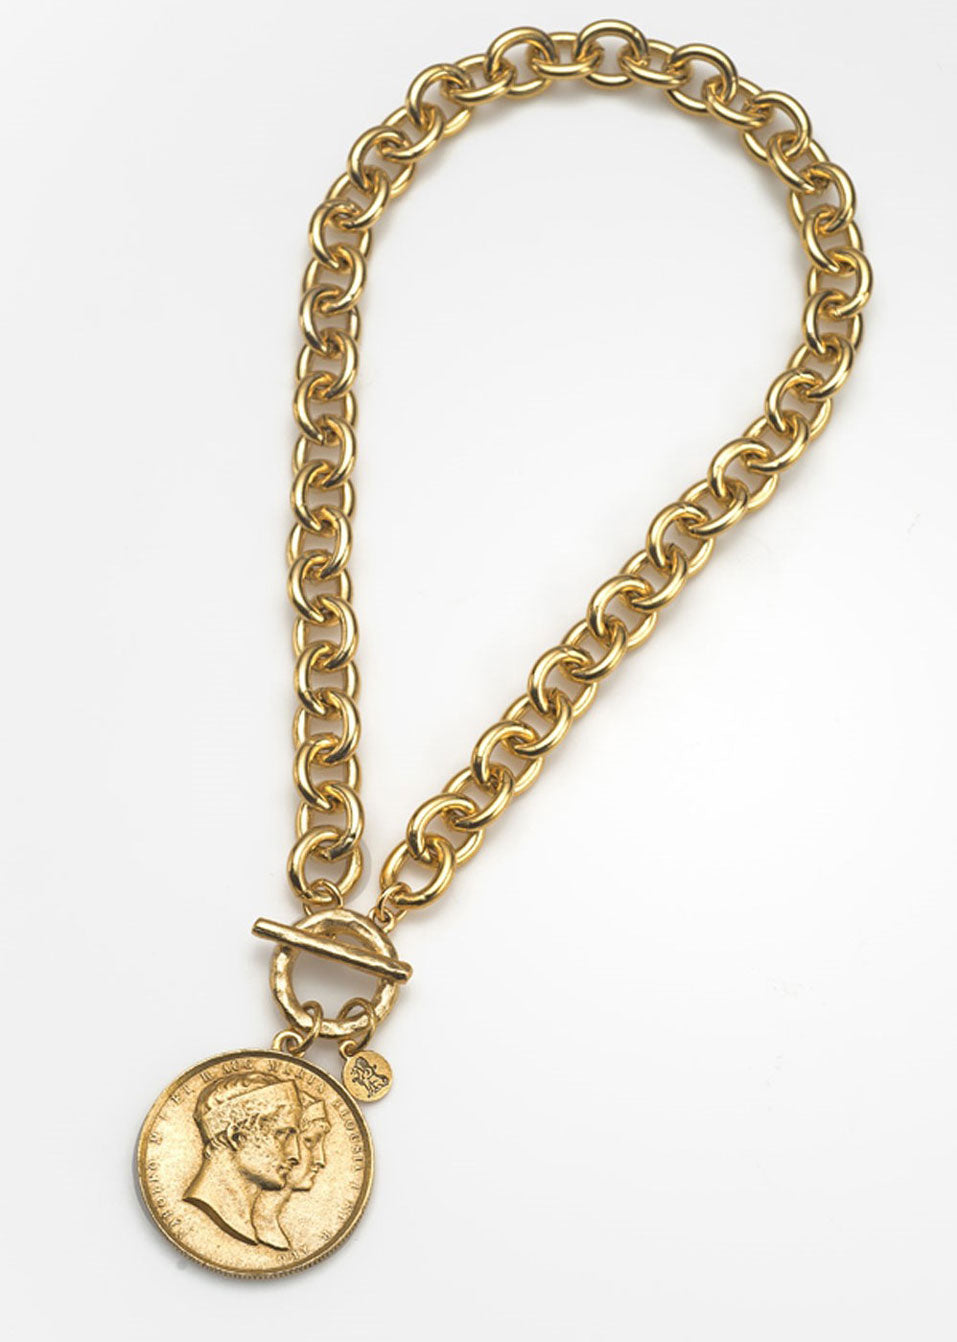 Napoleon Medallion Necklace